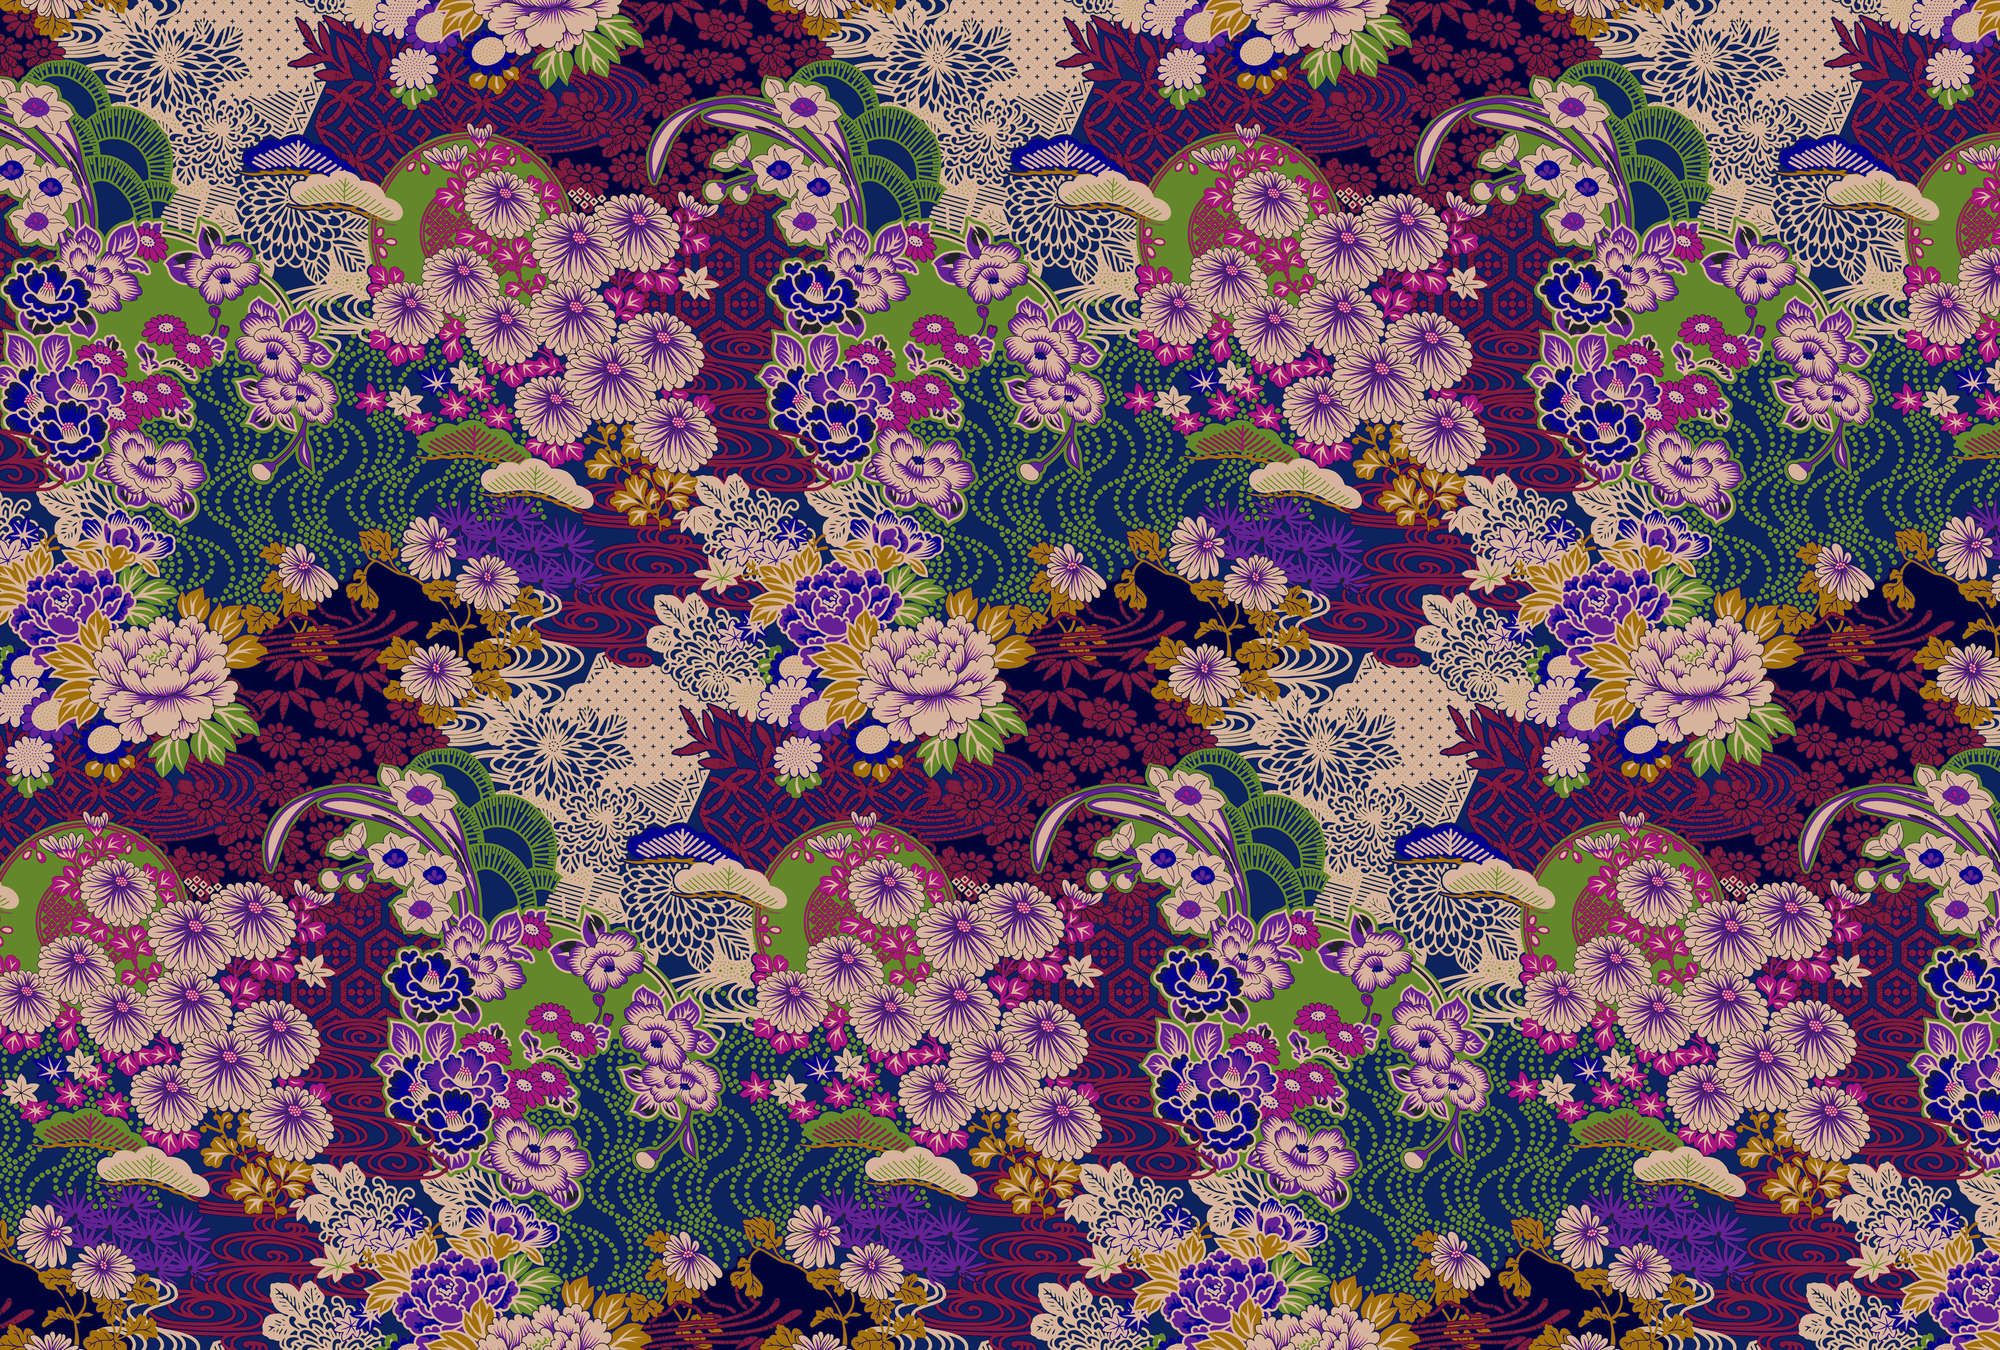             Photo wallpaper »kimo 2« - Abstract flower artwork - Purple, Green | Matt, Smooth non-woven fabric
        